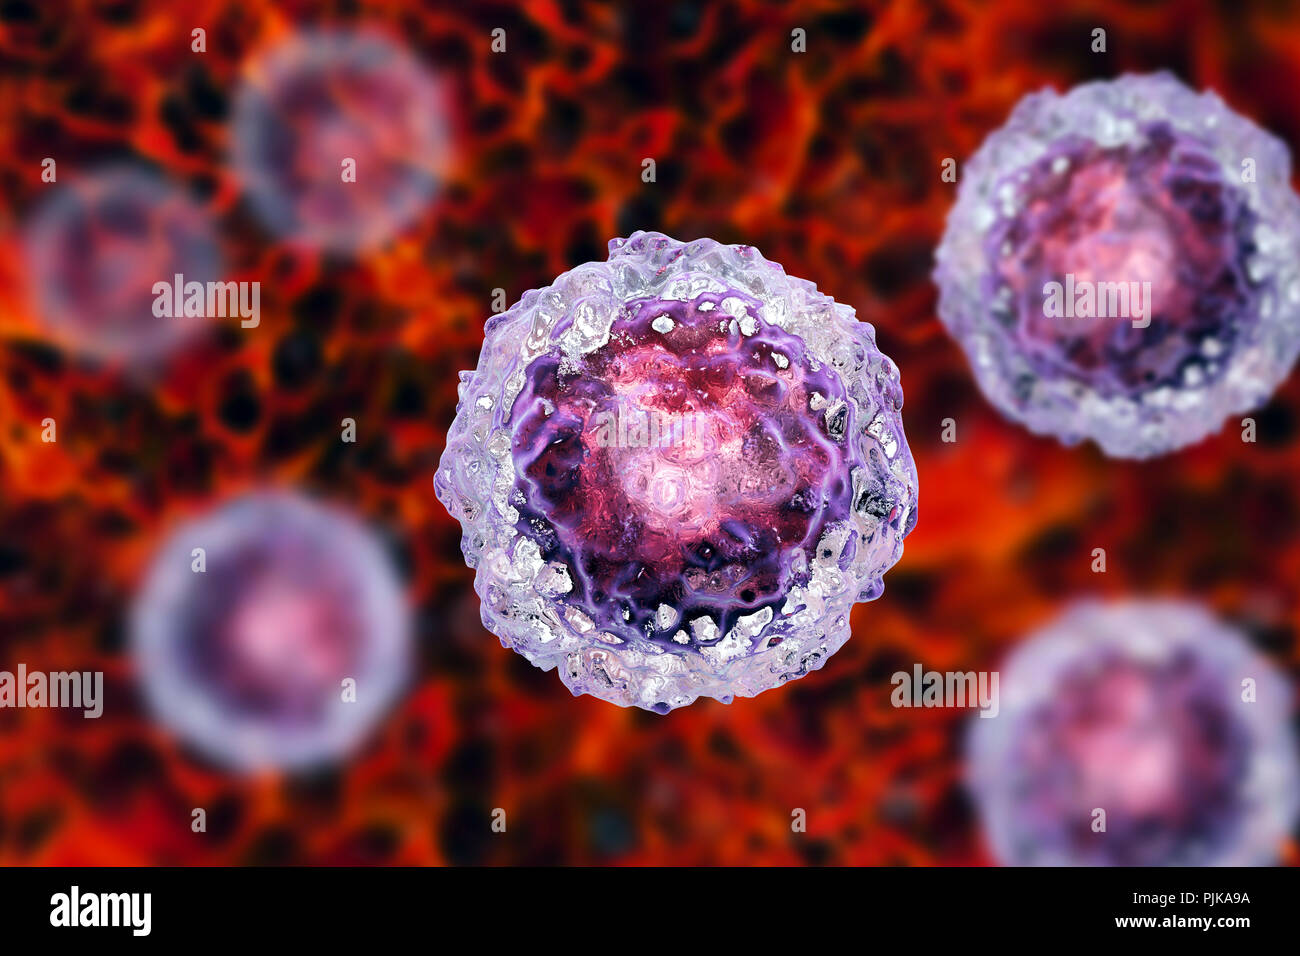 Human embryonic stem cells, computer illustration. Stock Photo